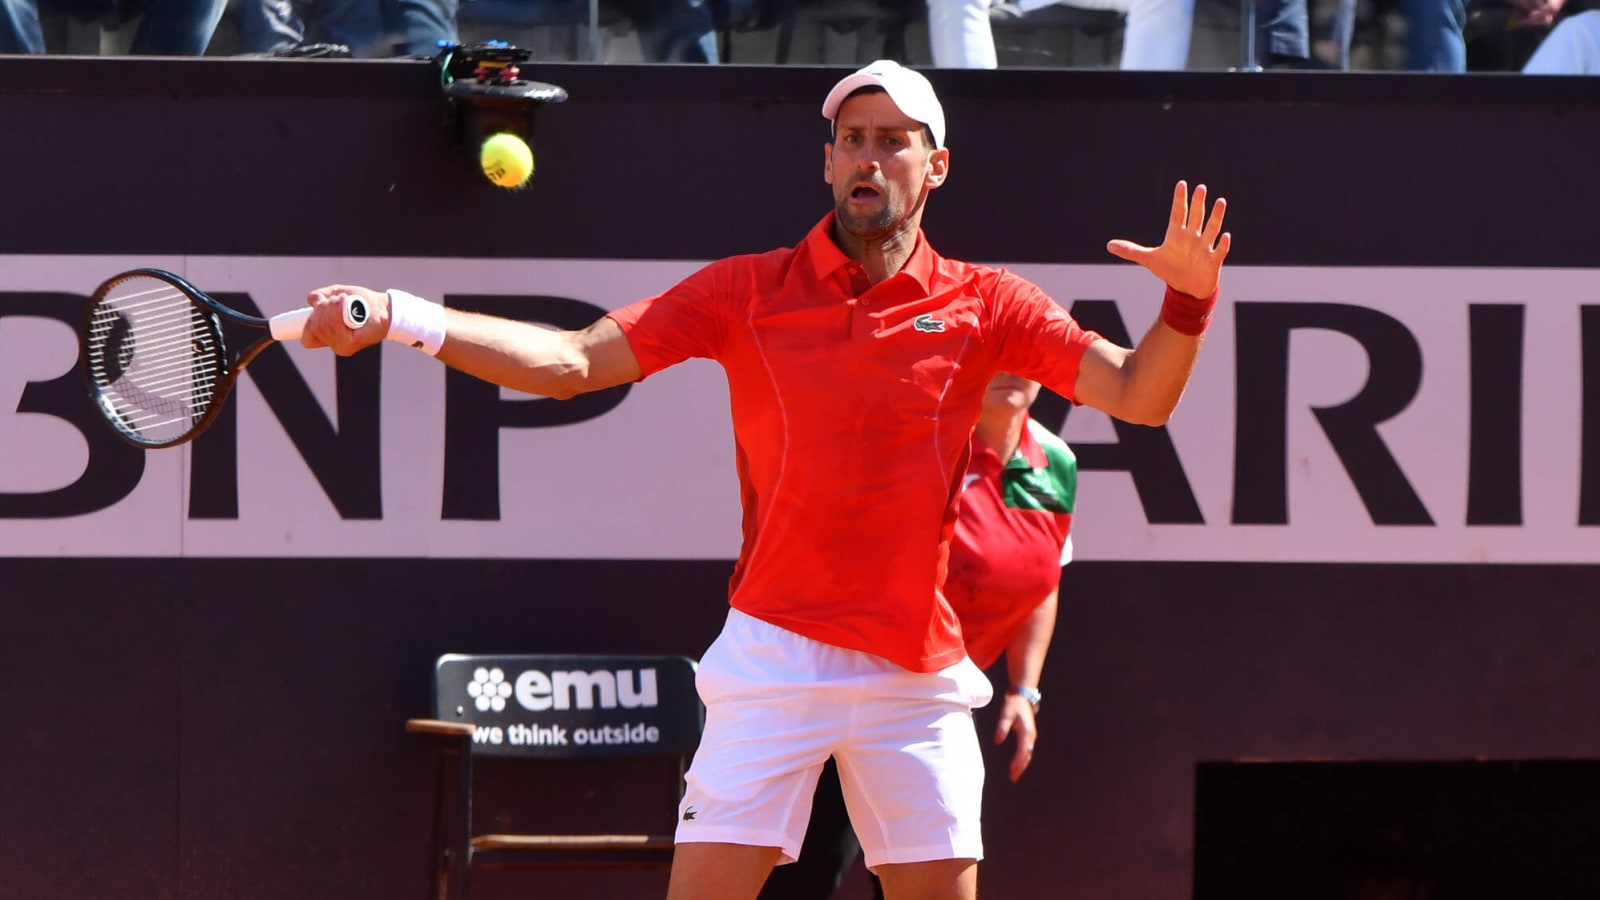 No Novak Djokovic in the top 50 highest-paid athletes despite winning 3 Grand Slams